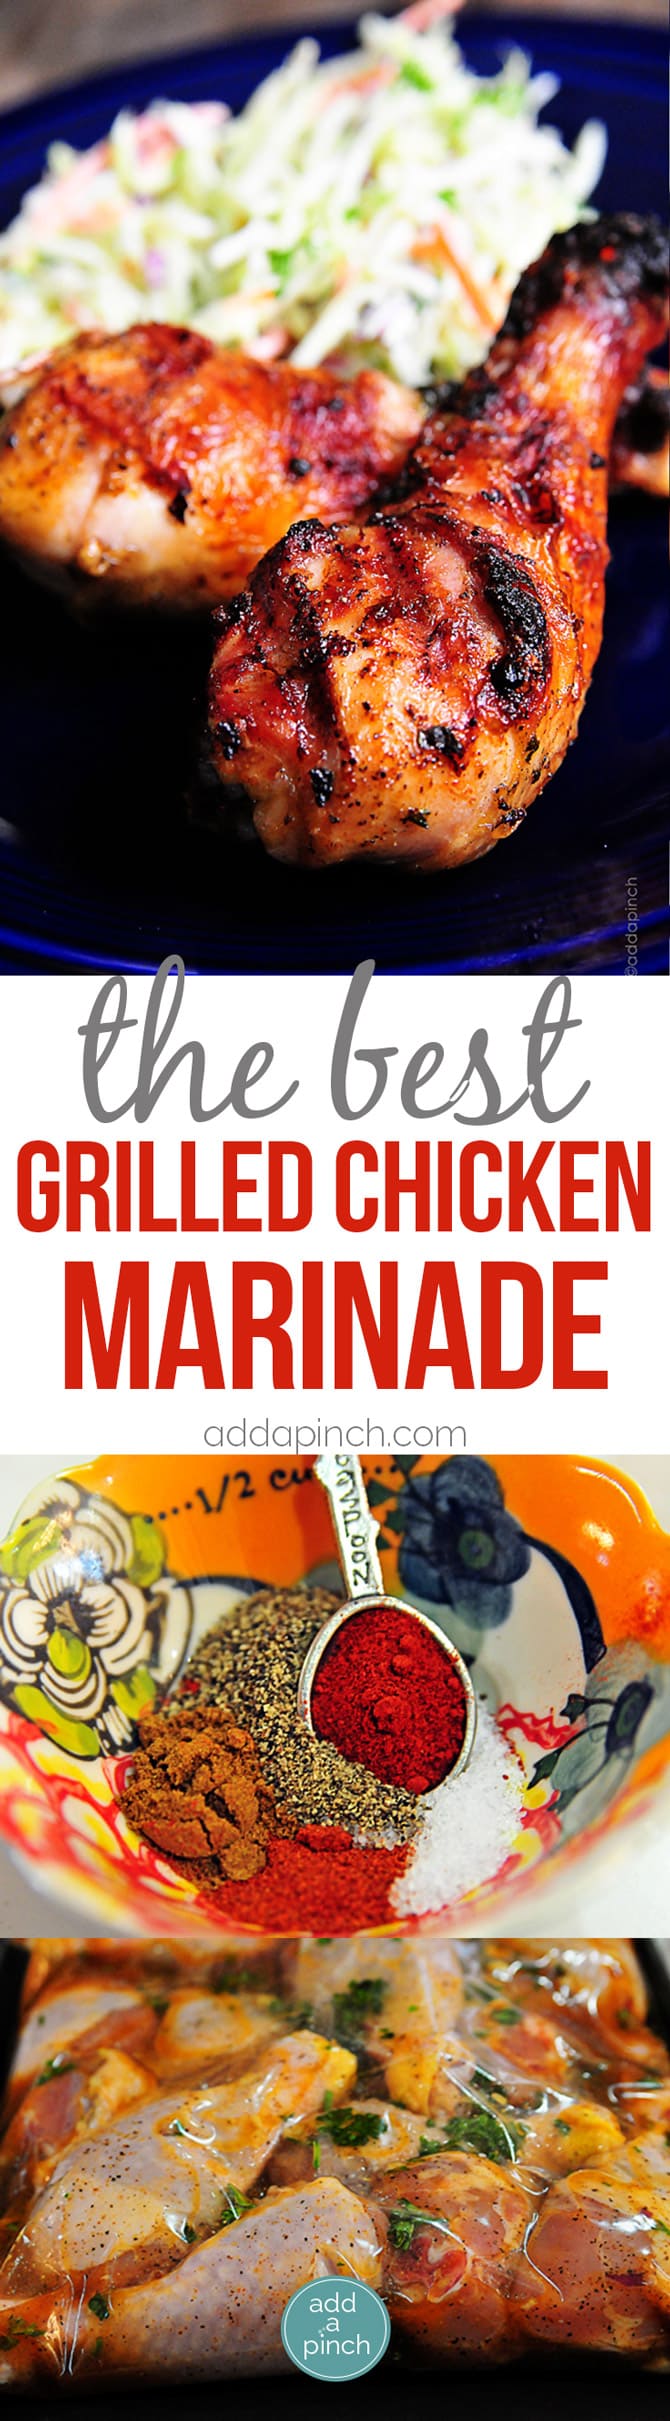 The Best Grilled Chicken Marinade Recipe - Add a Pinch